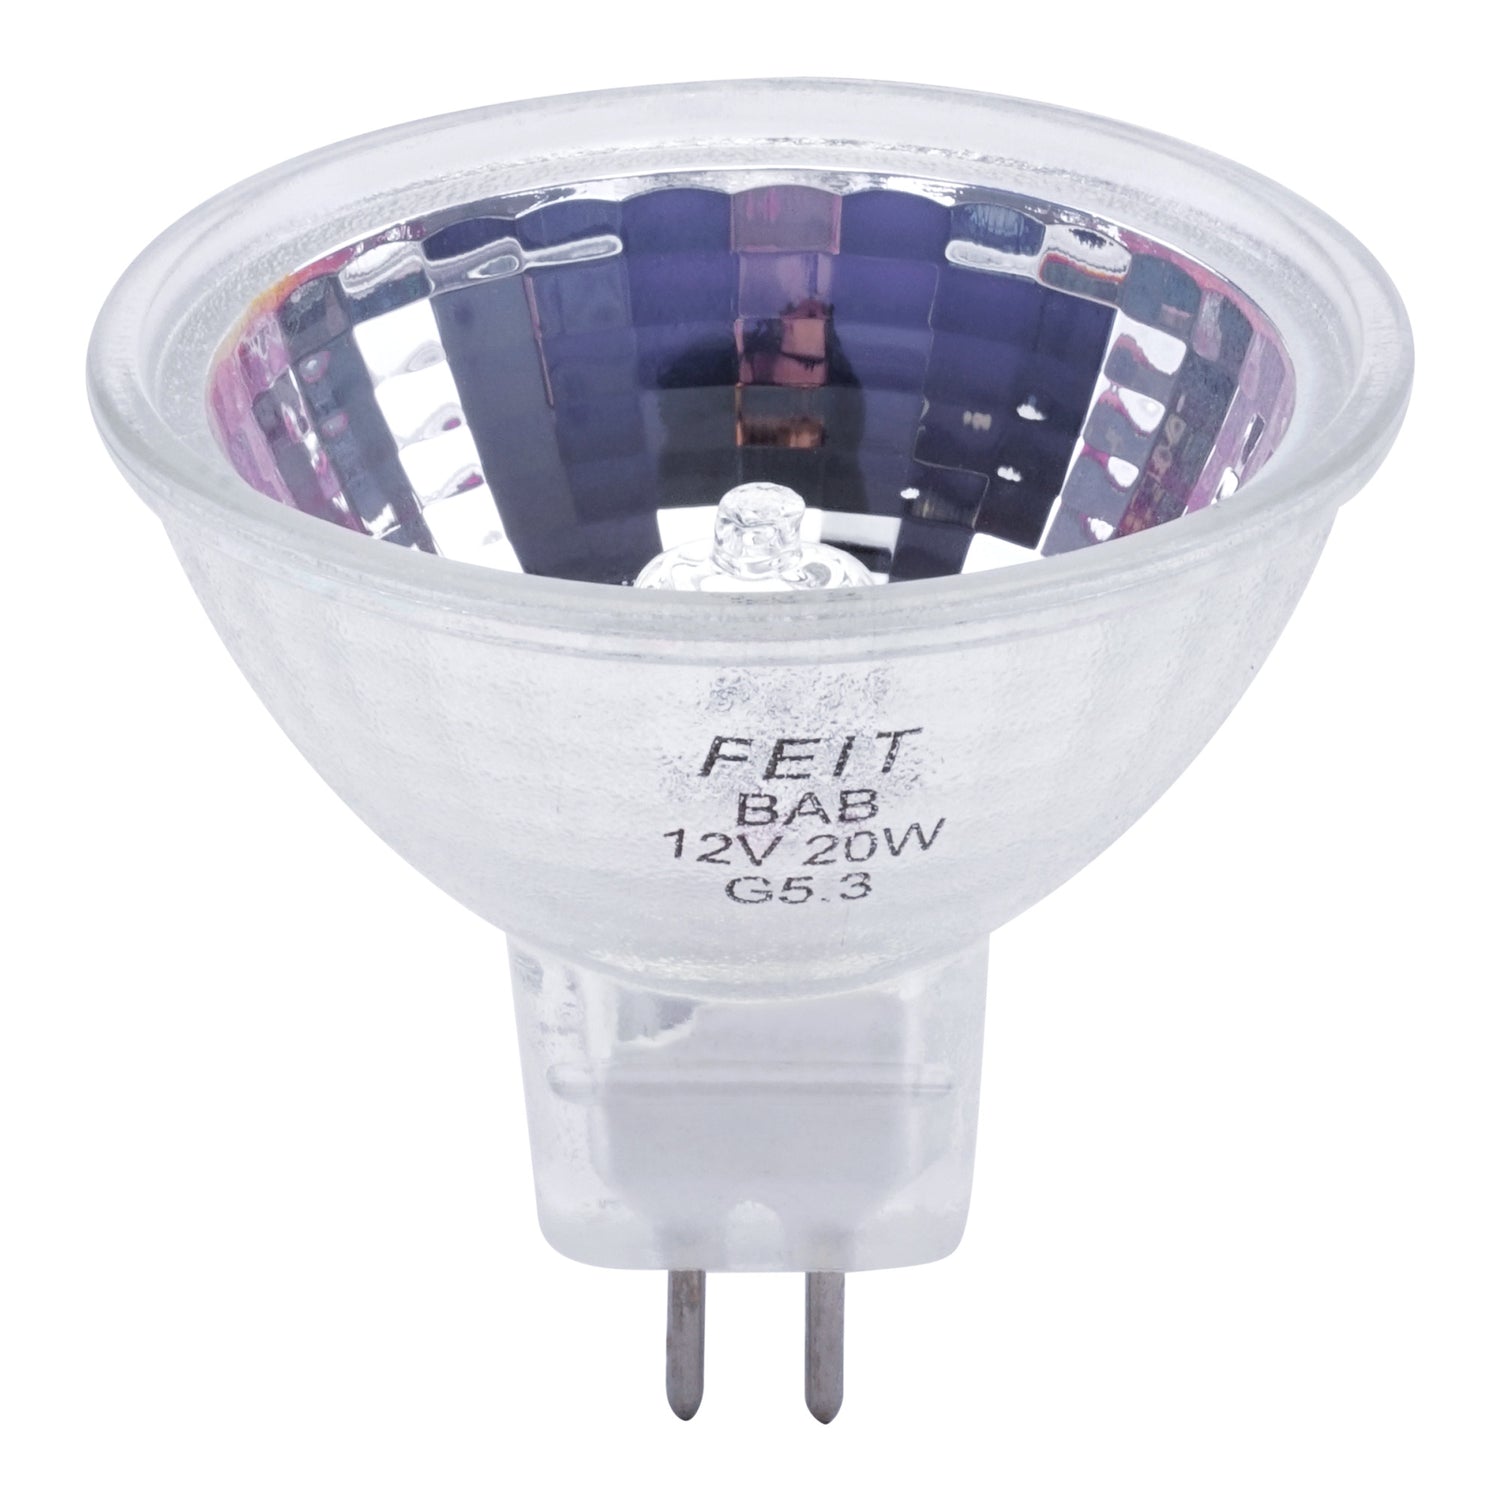 20W Warm White (3000K) MR16 GU5.3 Base Reflector Halogen Bulb